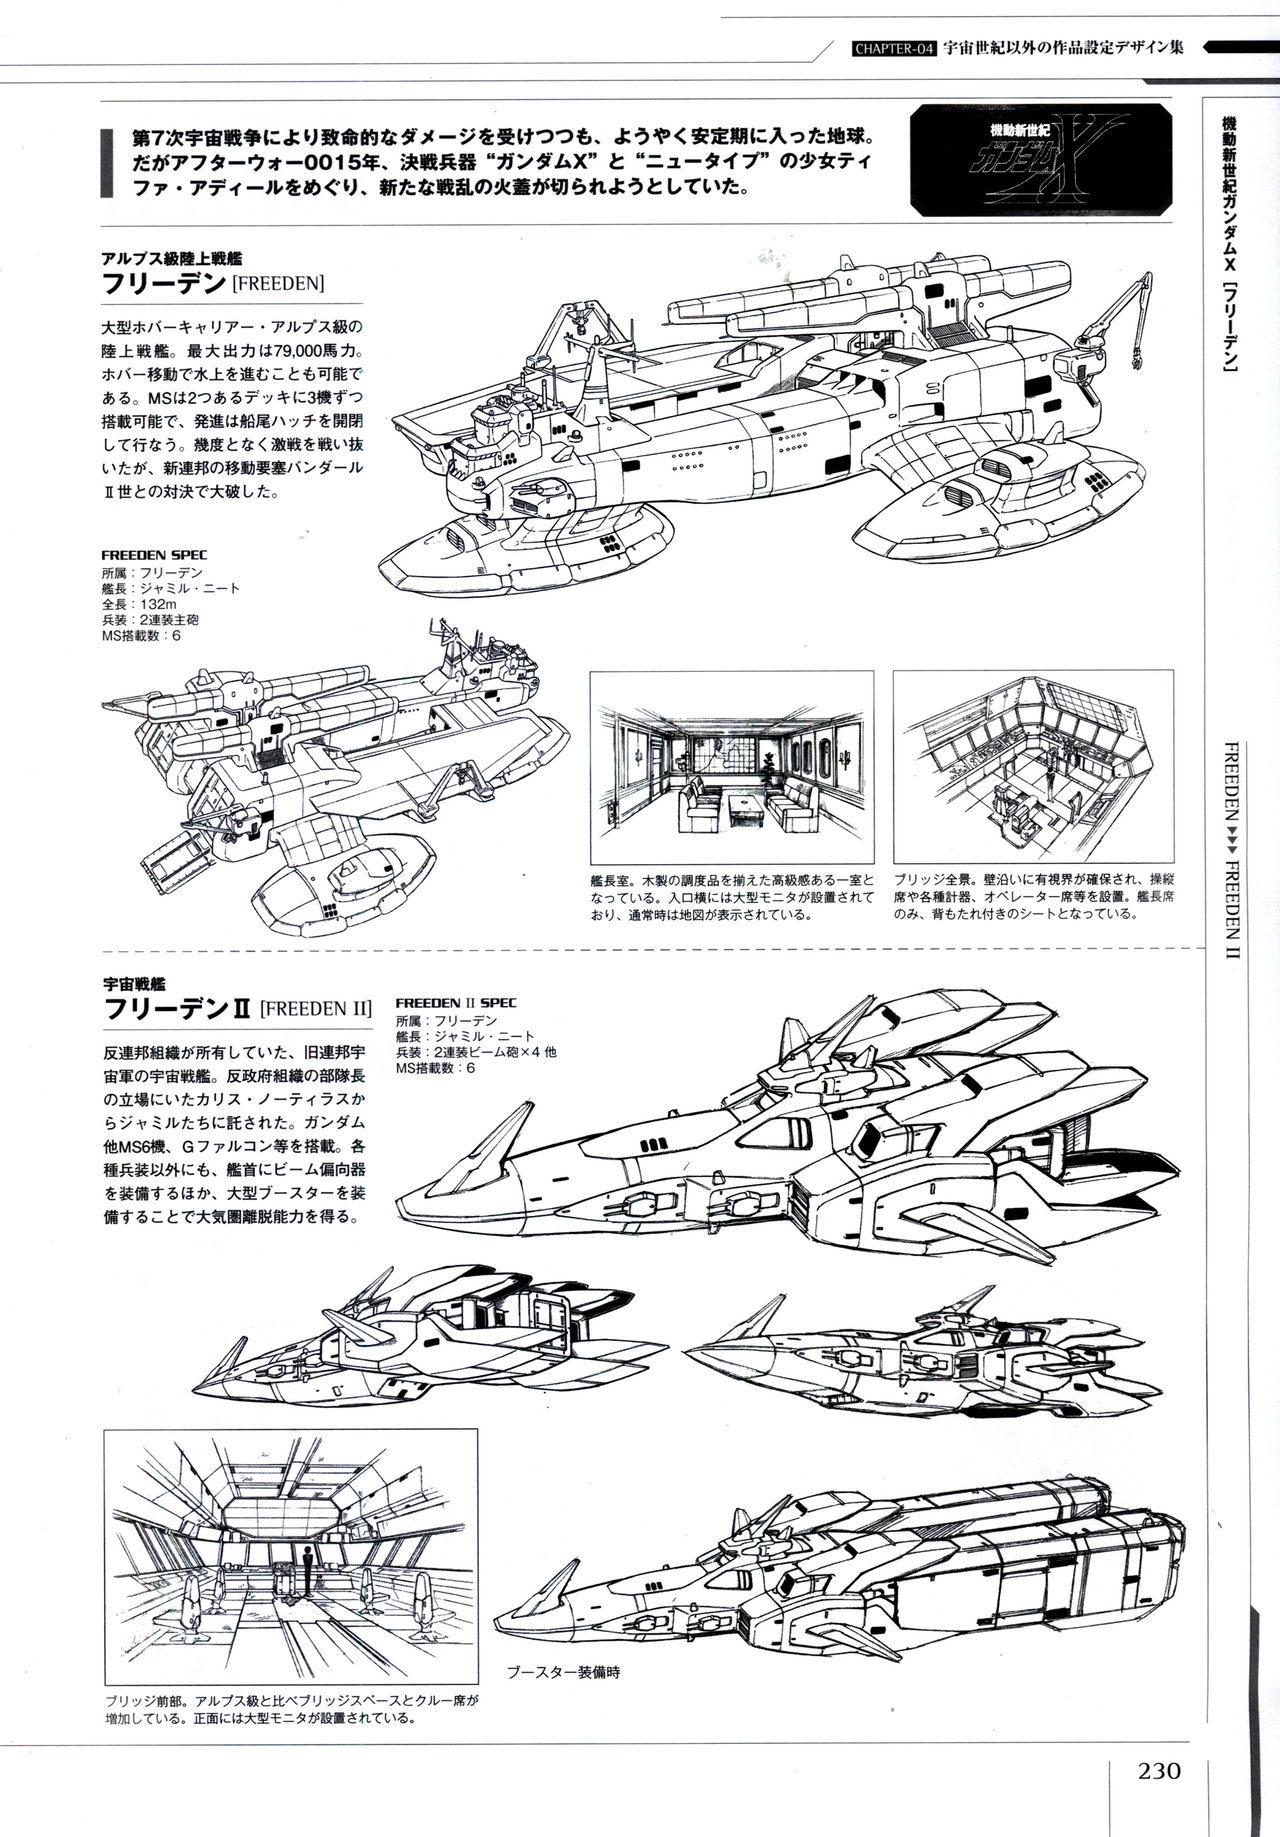 Mobile Suit Gundam - Ship & Aerospace Plane Encyclopedia - Revised Edition 235